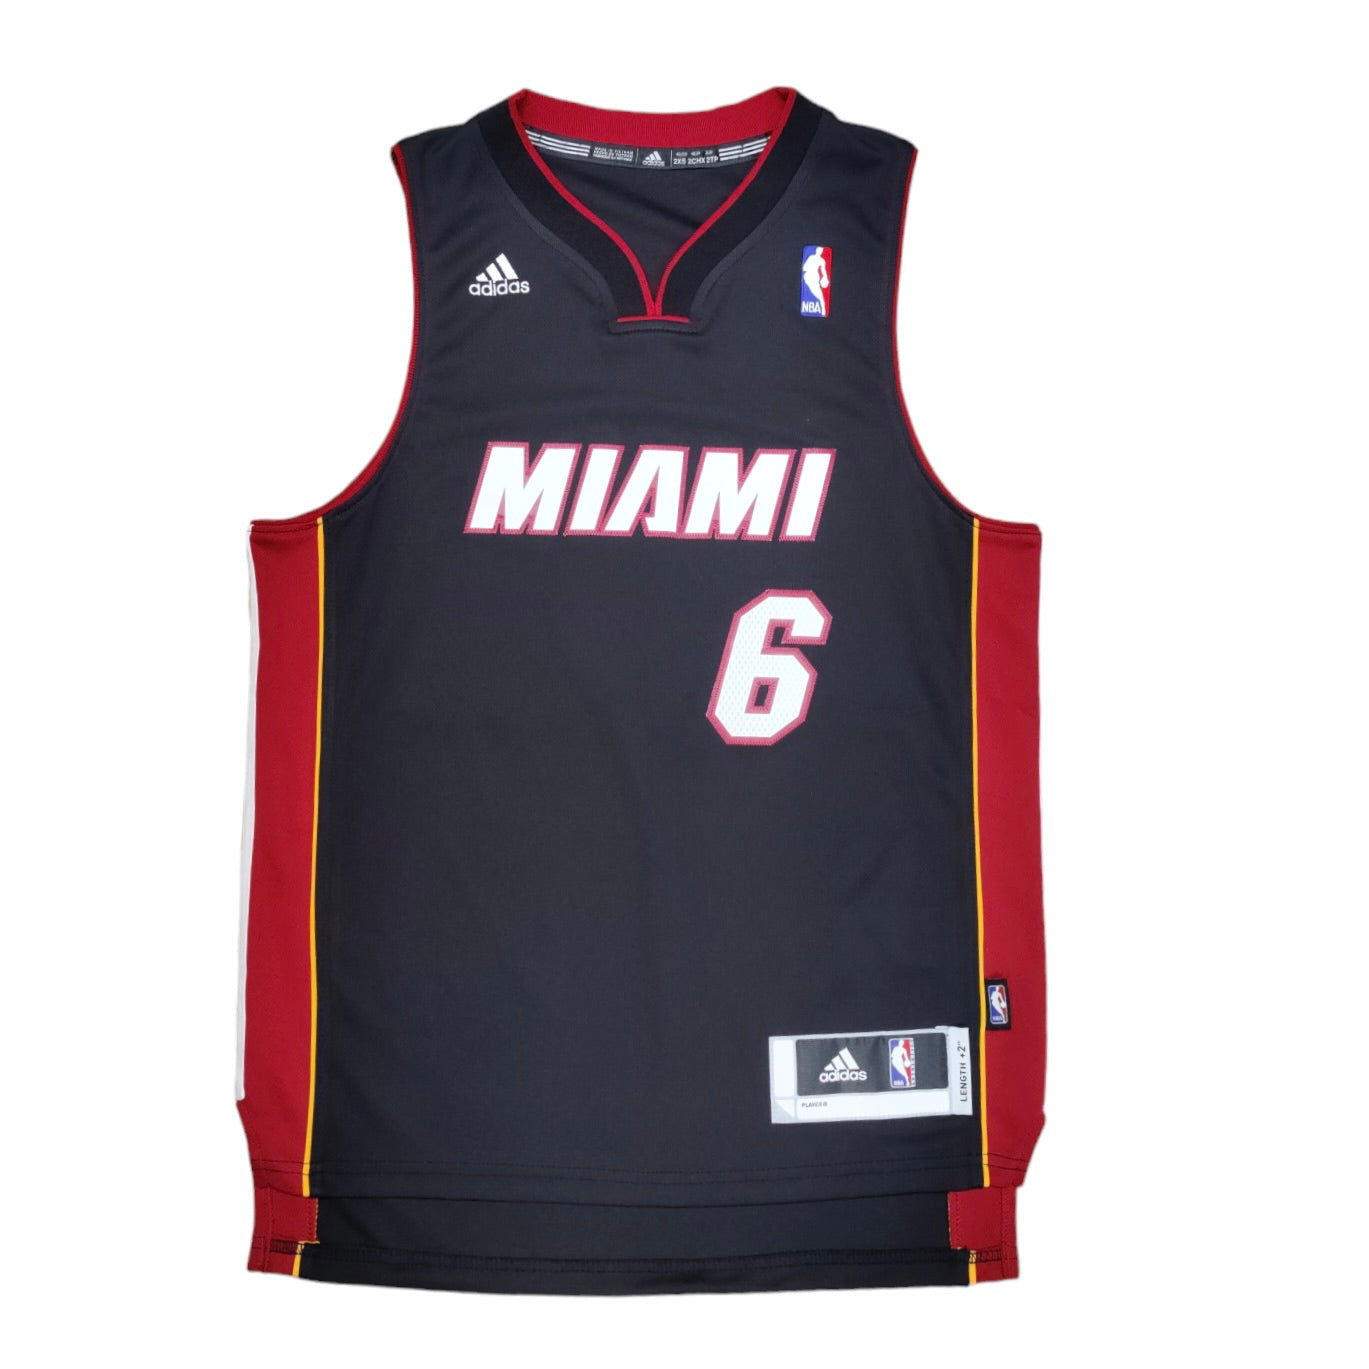 Adidas James LeBron Miami Heat Basketball Jersey